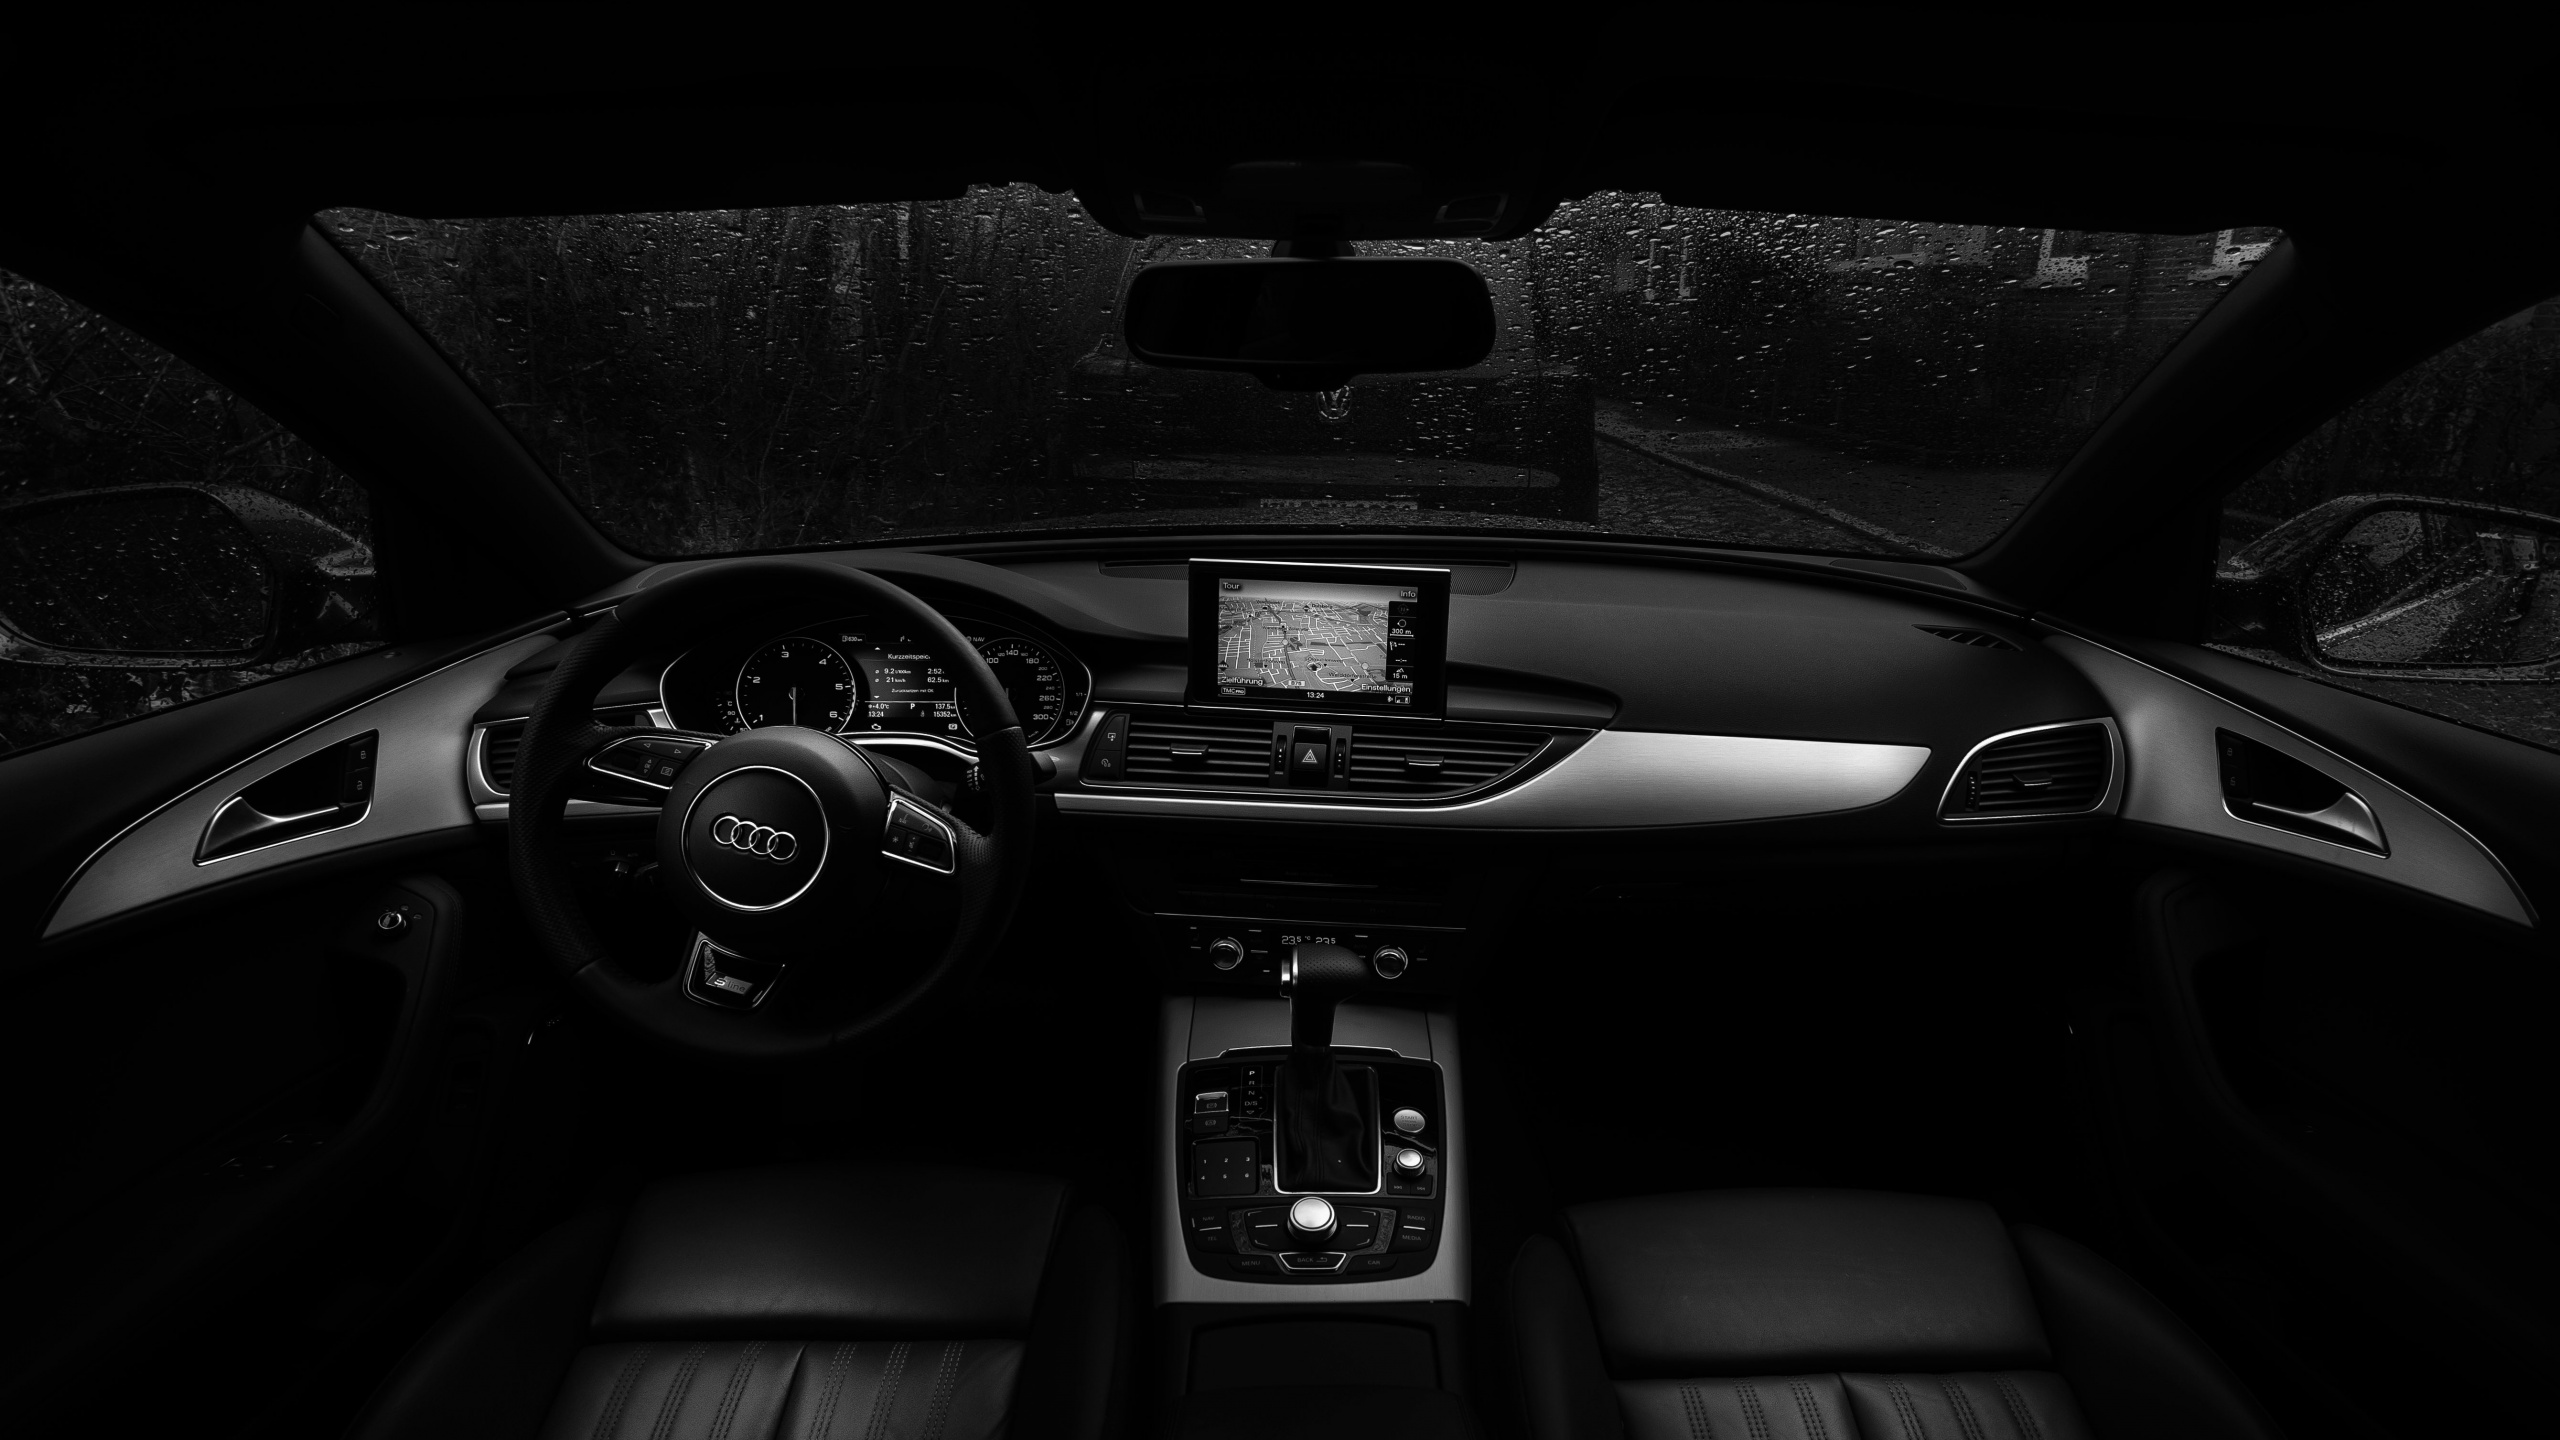 Black and Gray Car Interior. Wallpaper in 2560x1440 Resolution